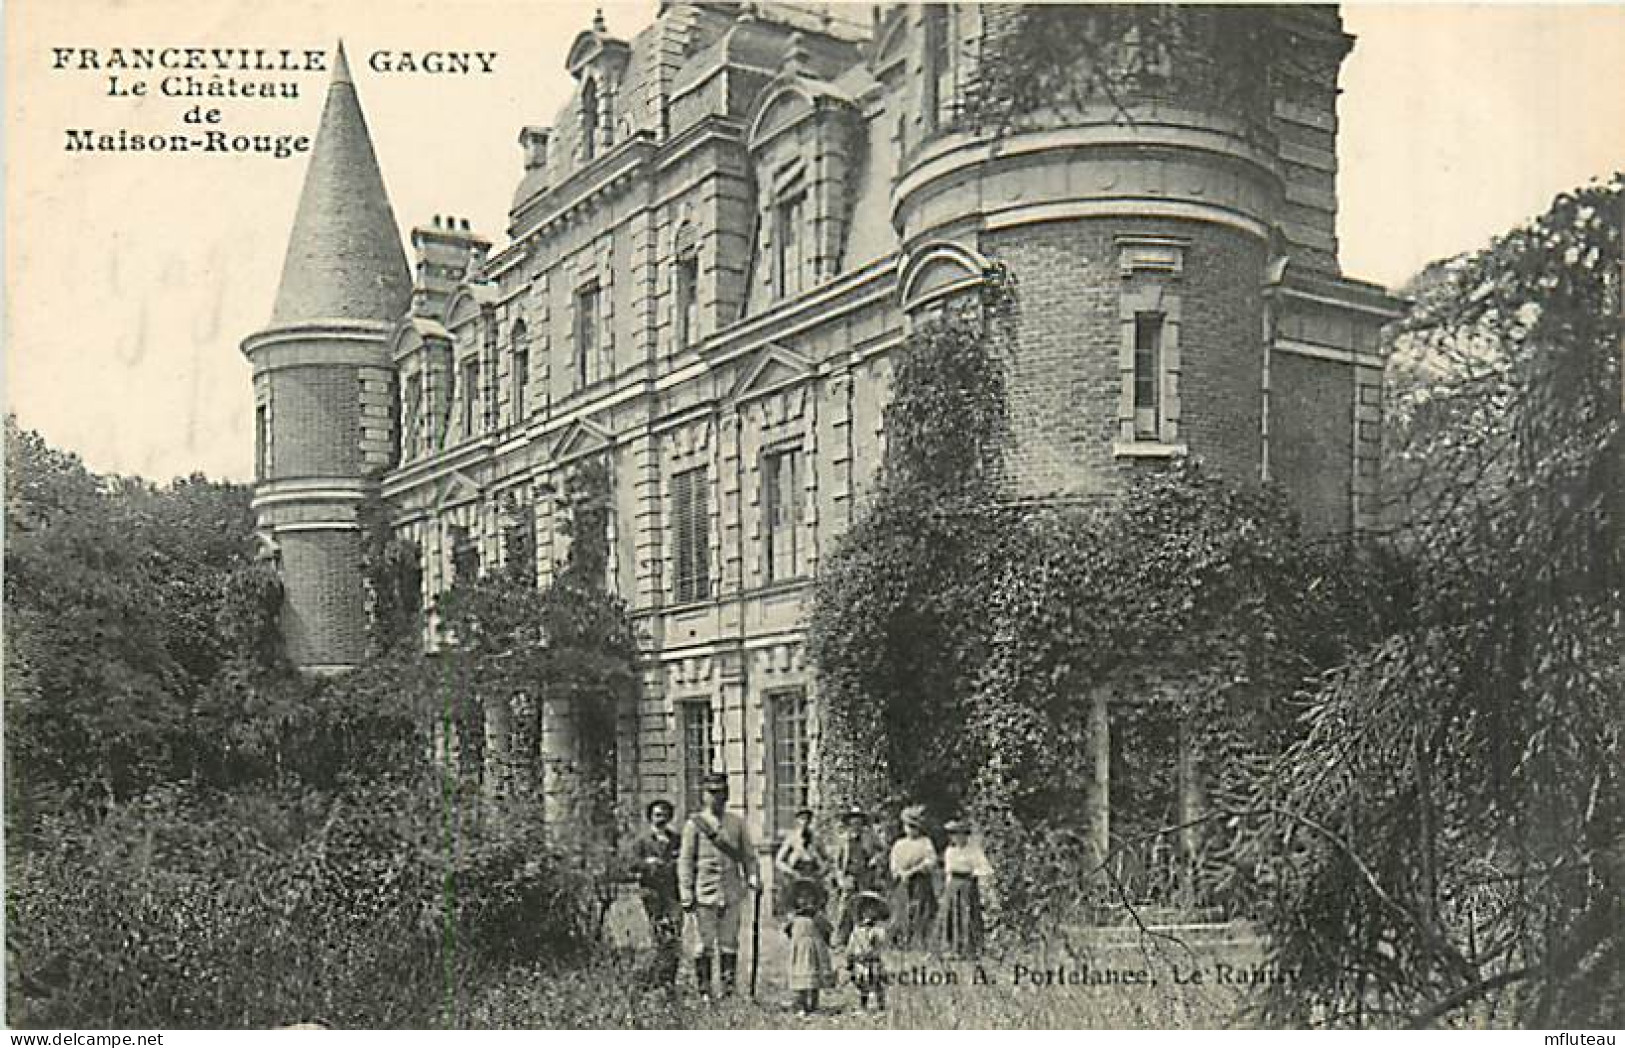 93* FRANCEVILLE GAGNY  Chateau Maison Rouge            MA98,0452 - Gagny